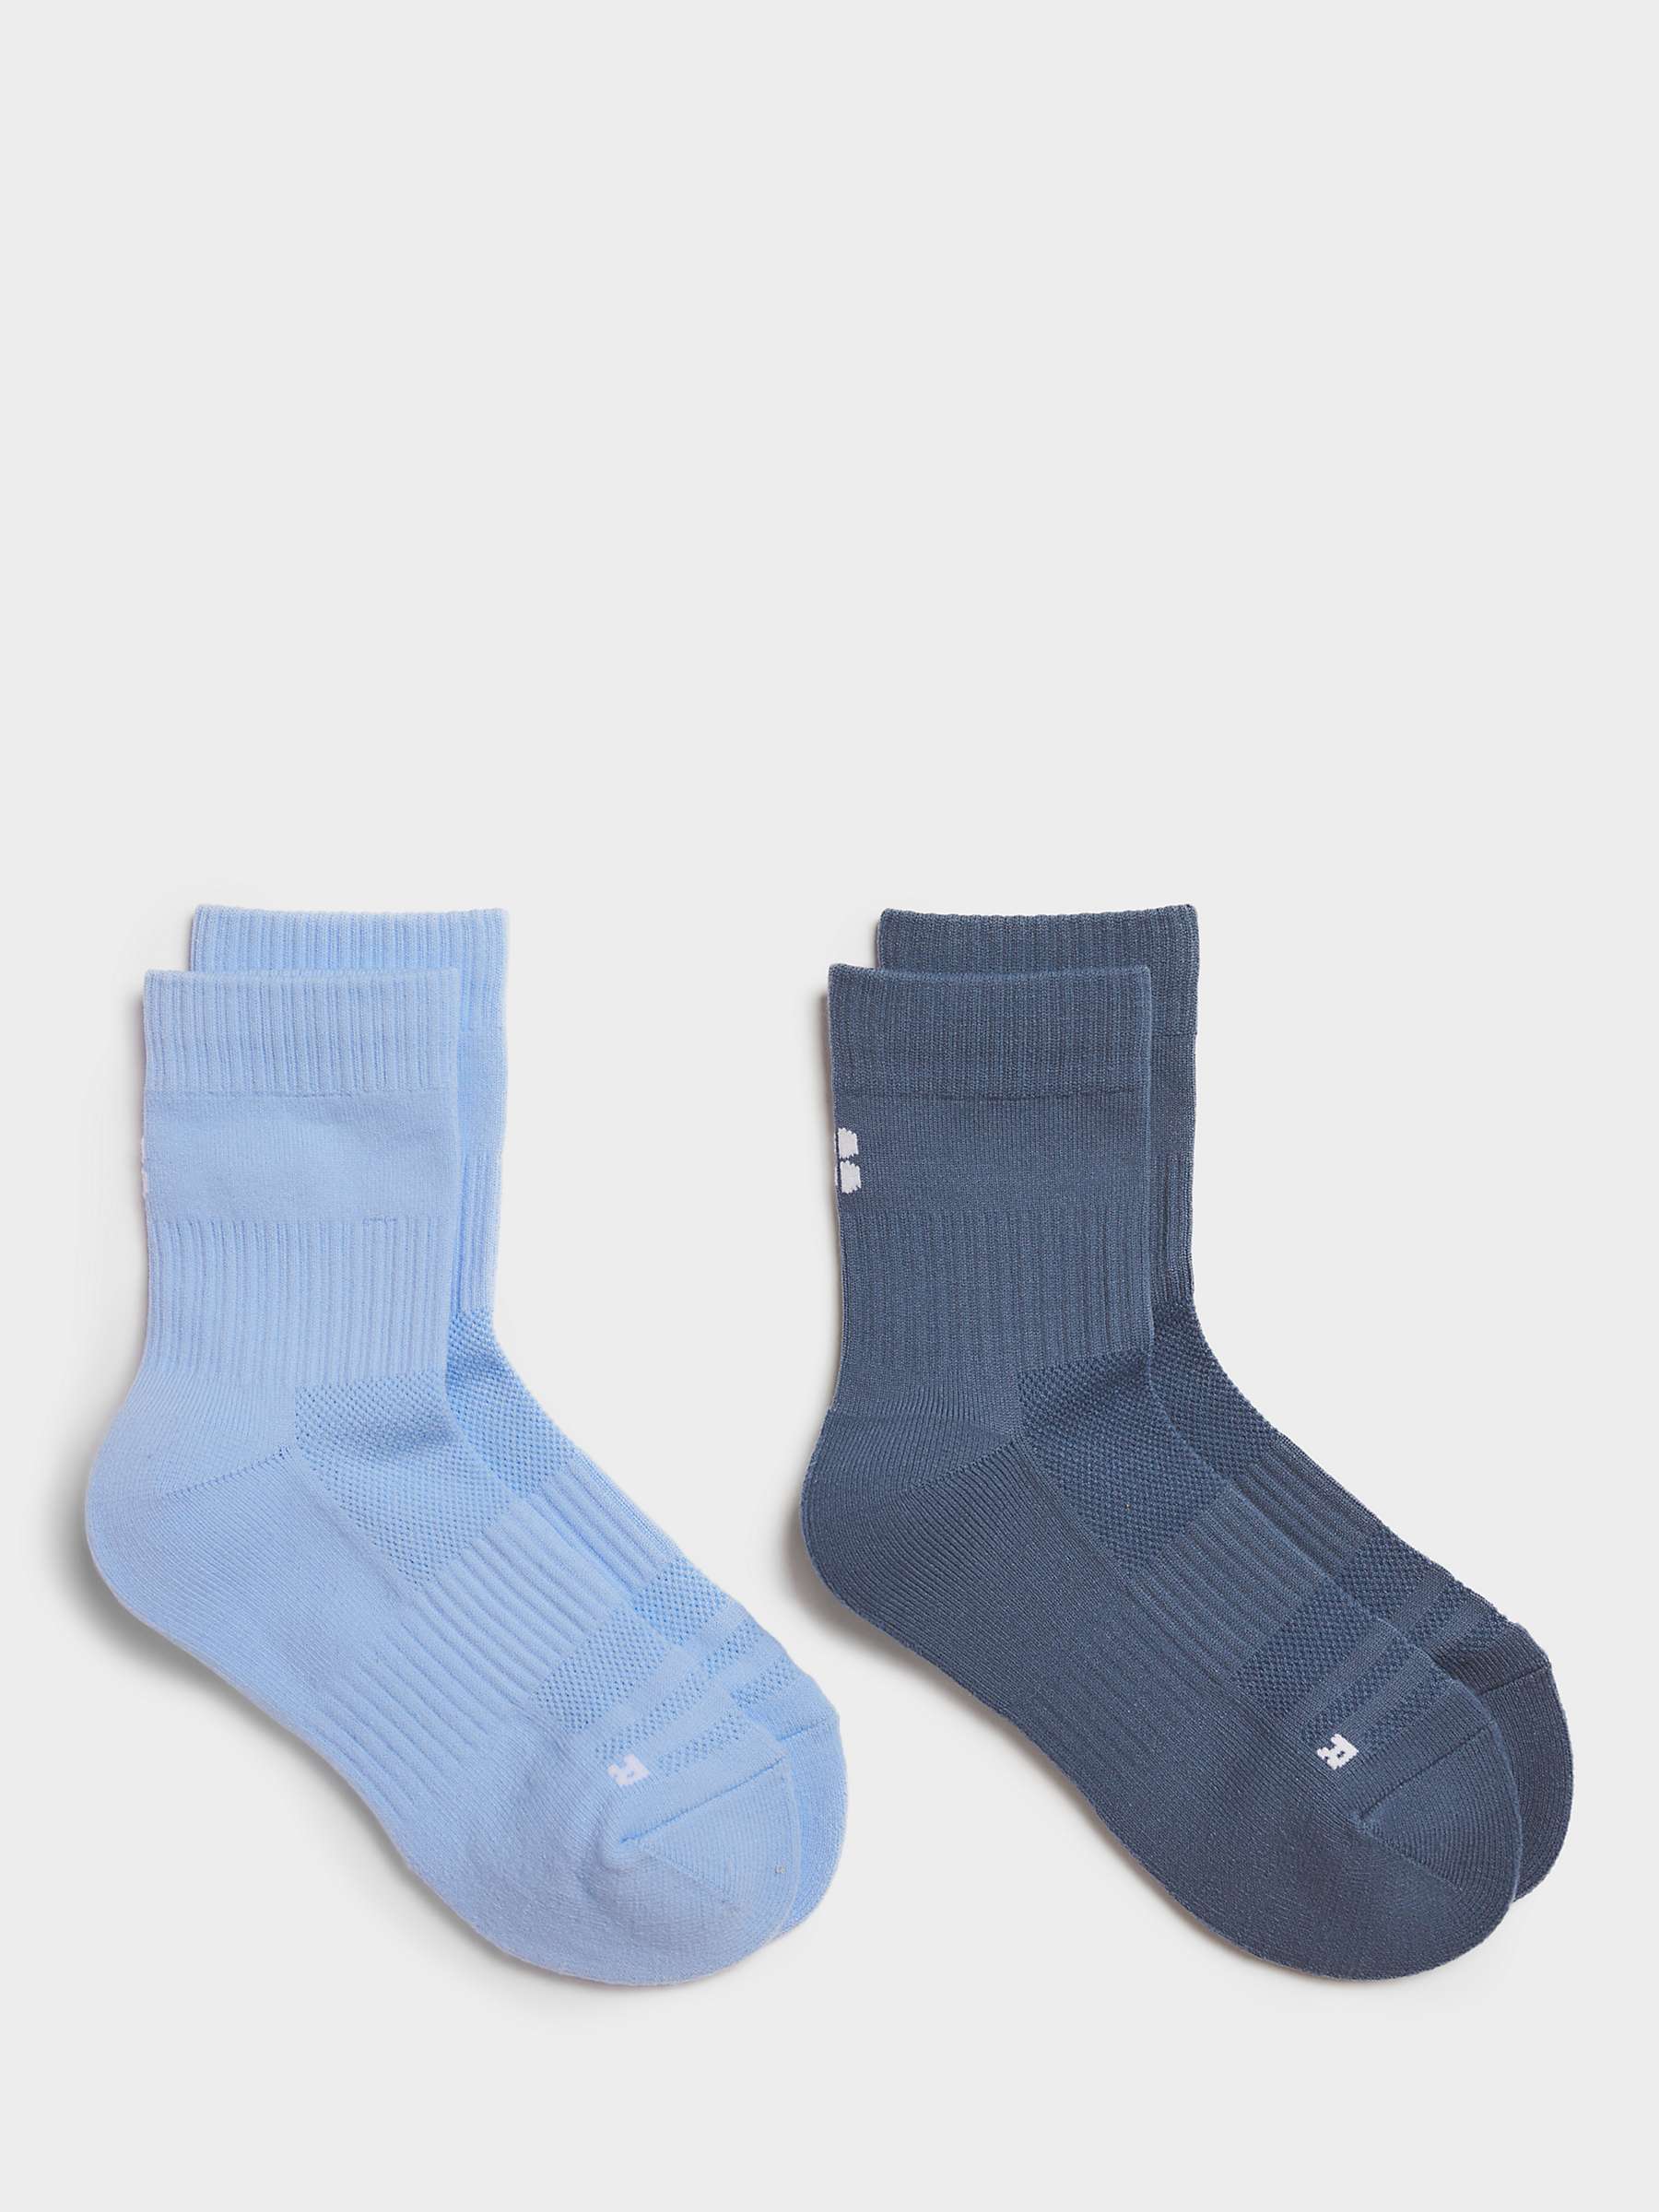 Buy Sweaty Betty Crew Running Socks, Pack of 2 Online at johnlewis.com